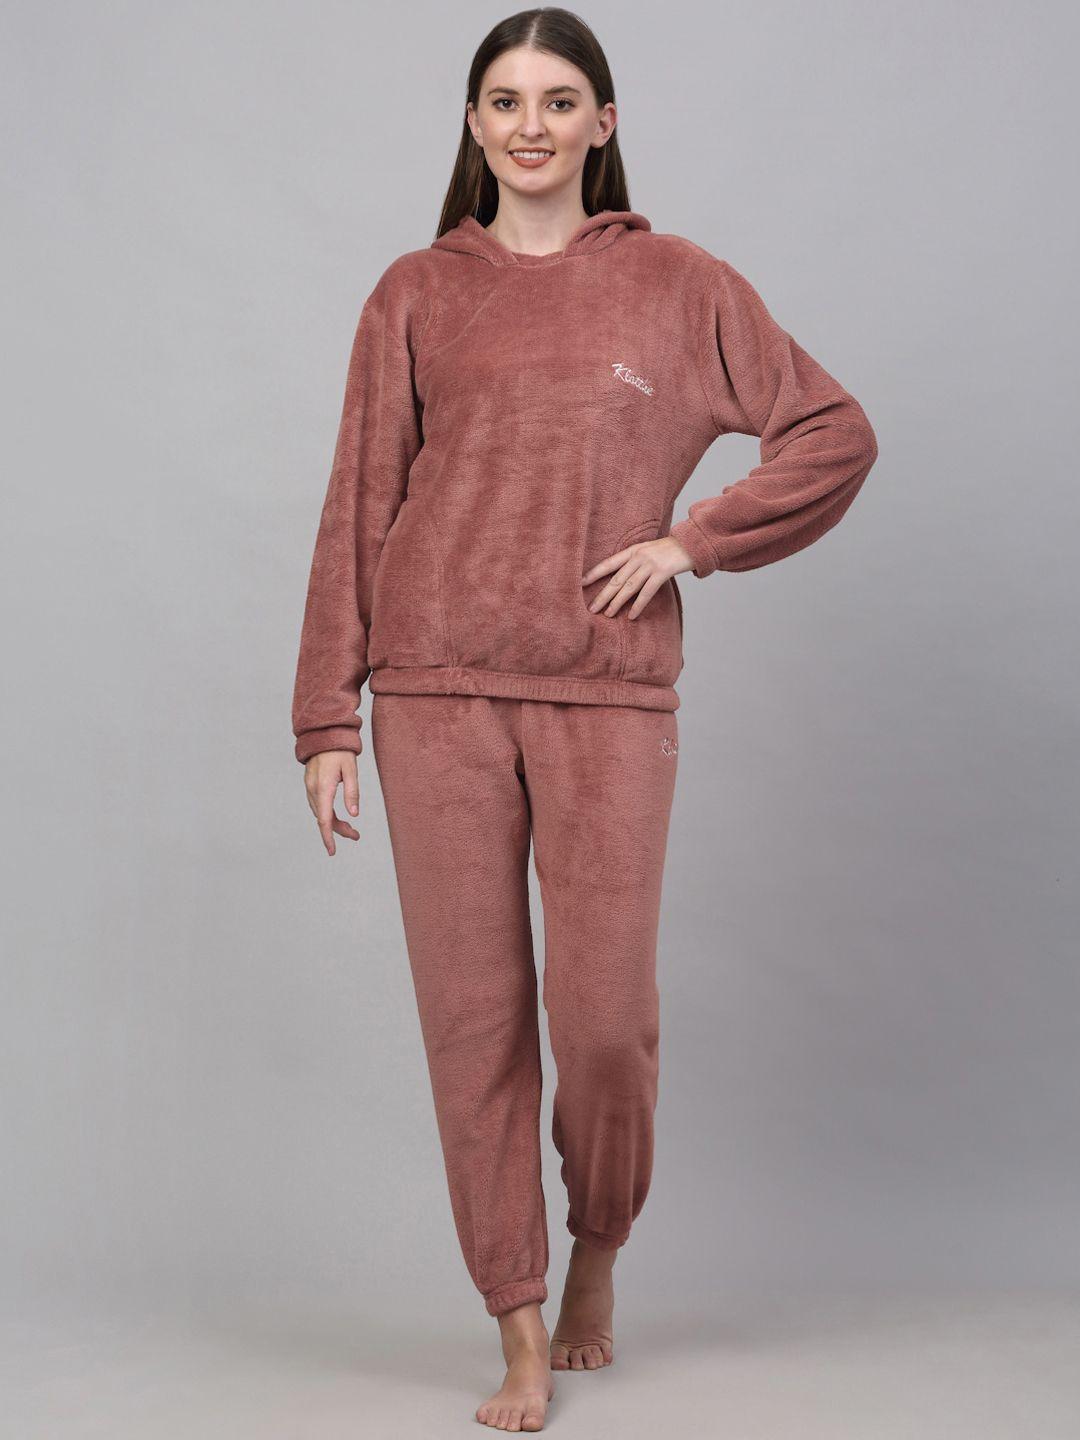 klotthe women woollen hooded pyjama set